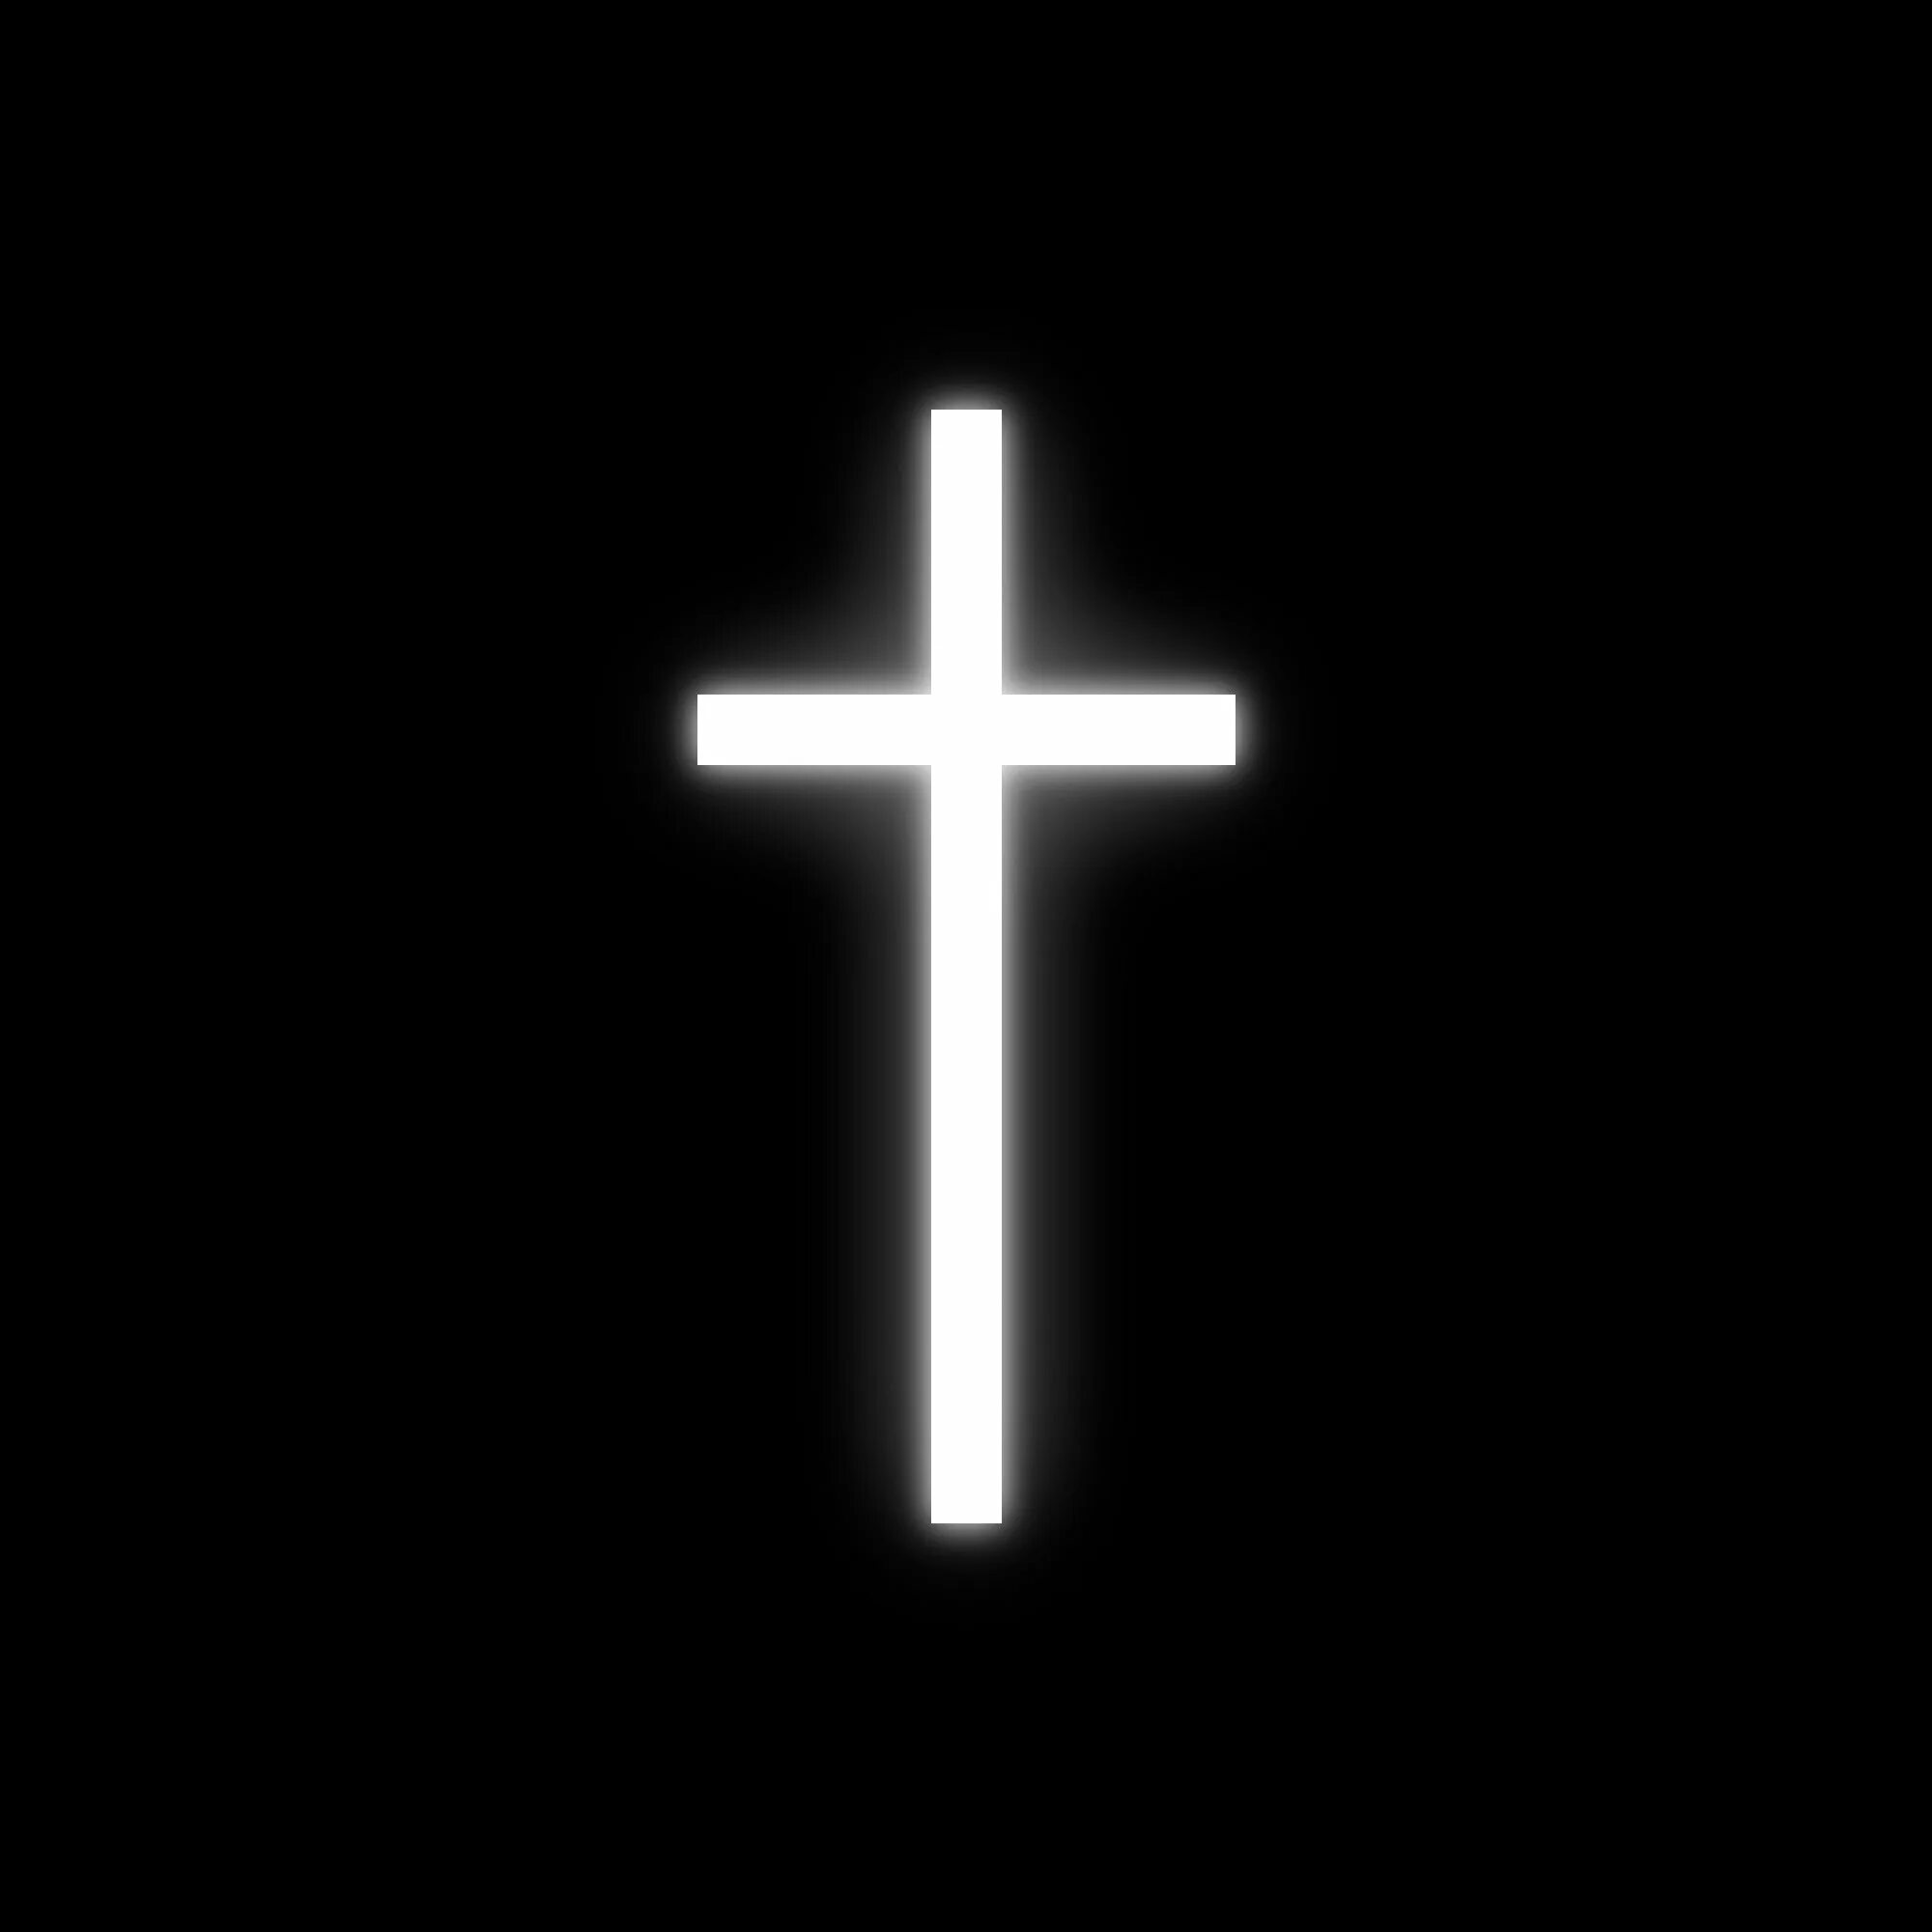 Крест на черном фоне. Крест на темном фоне. Крест во тьме. Христианский крест на черном фоне. Исповедь креста